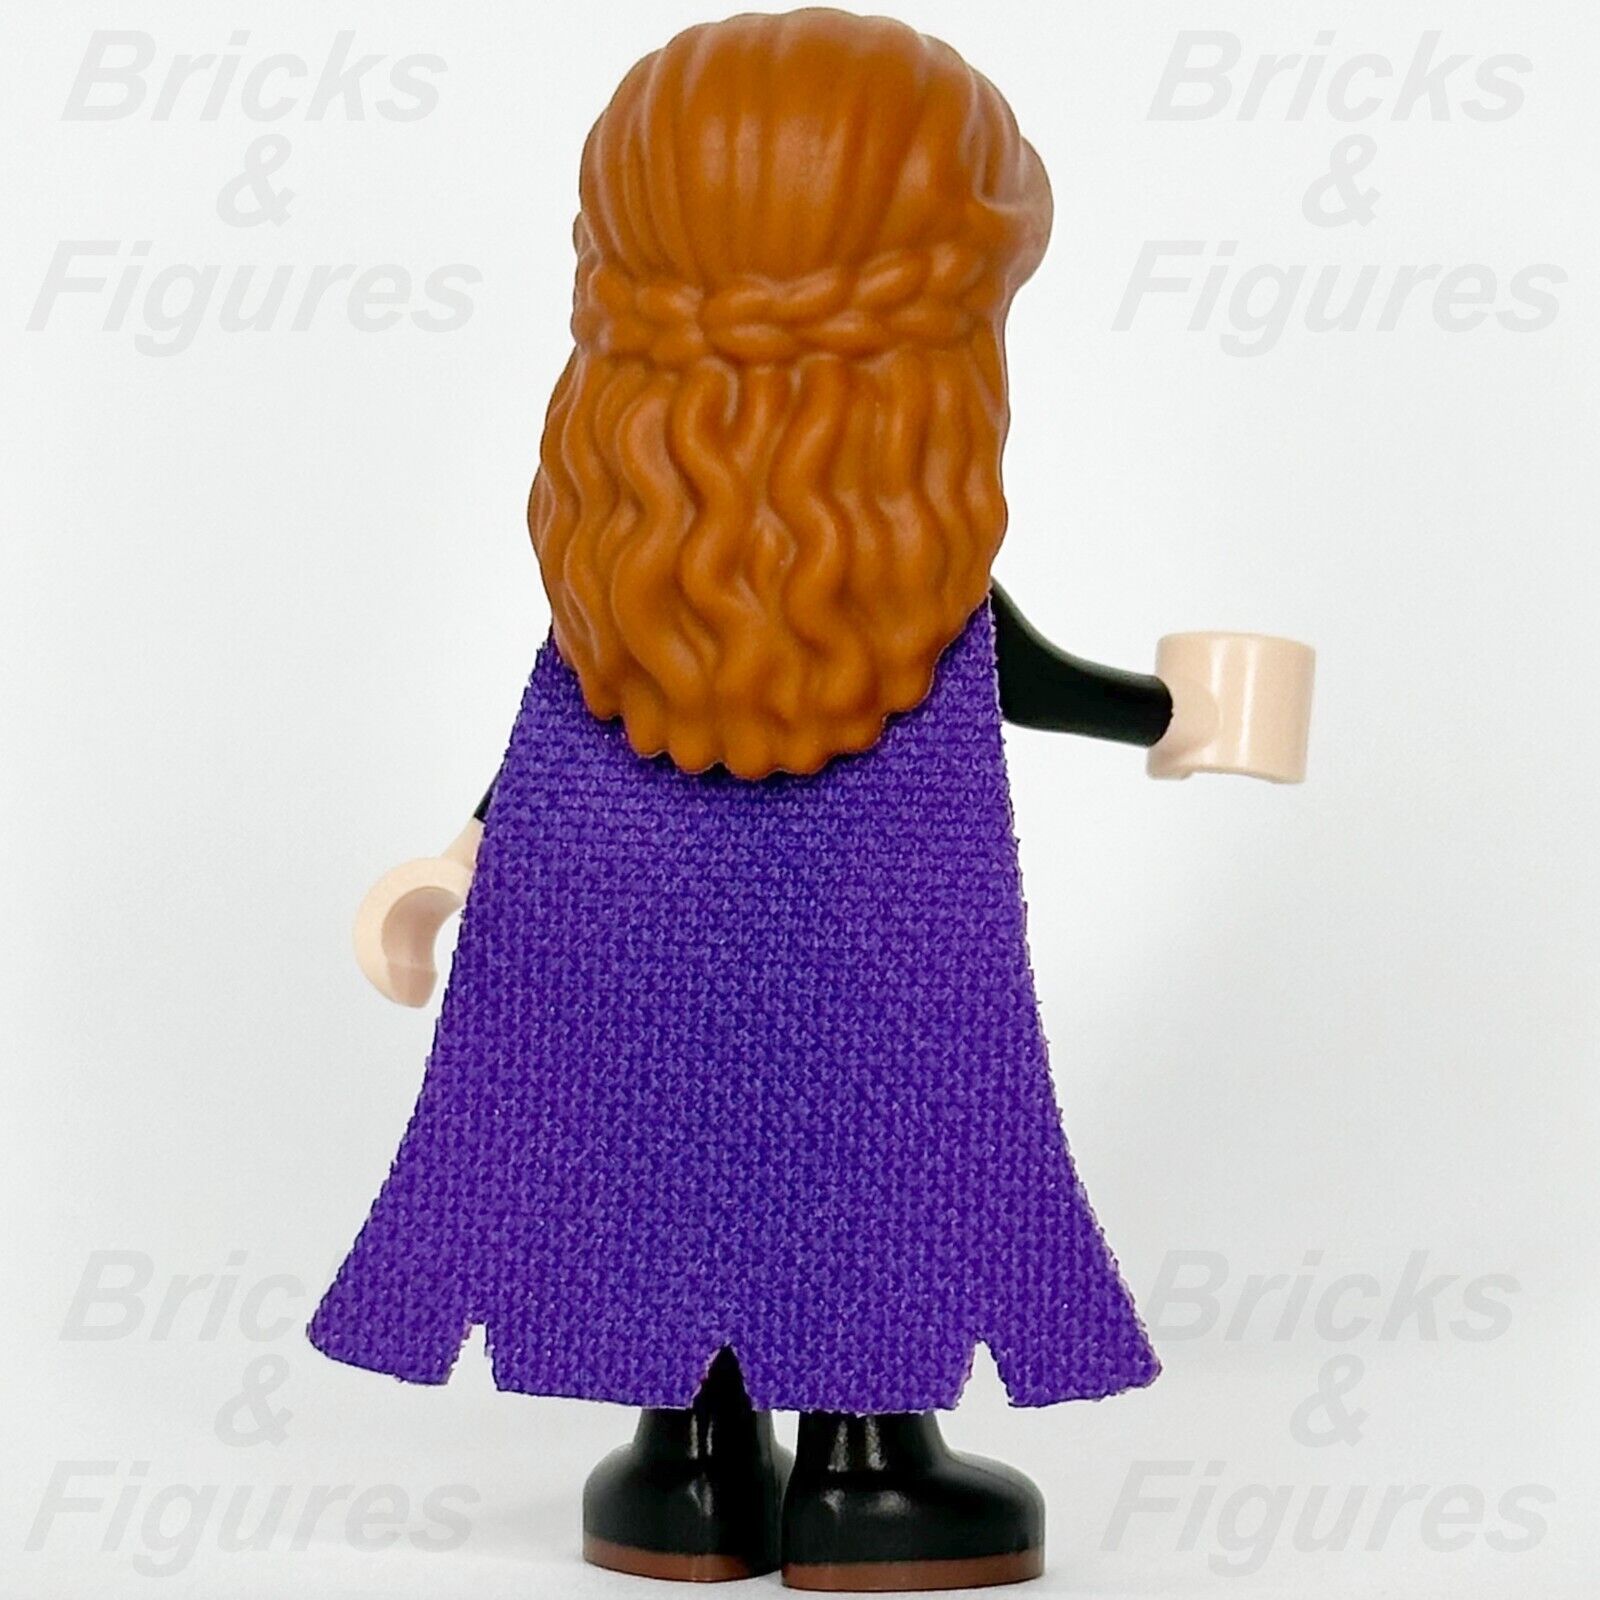 LEGO Disney Princess Anna Minifigure Frozen 2 Black Dress 41164 41165 dp073